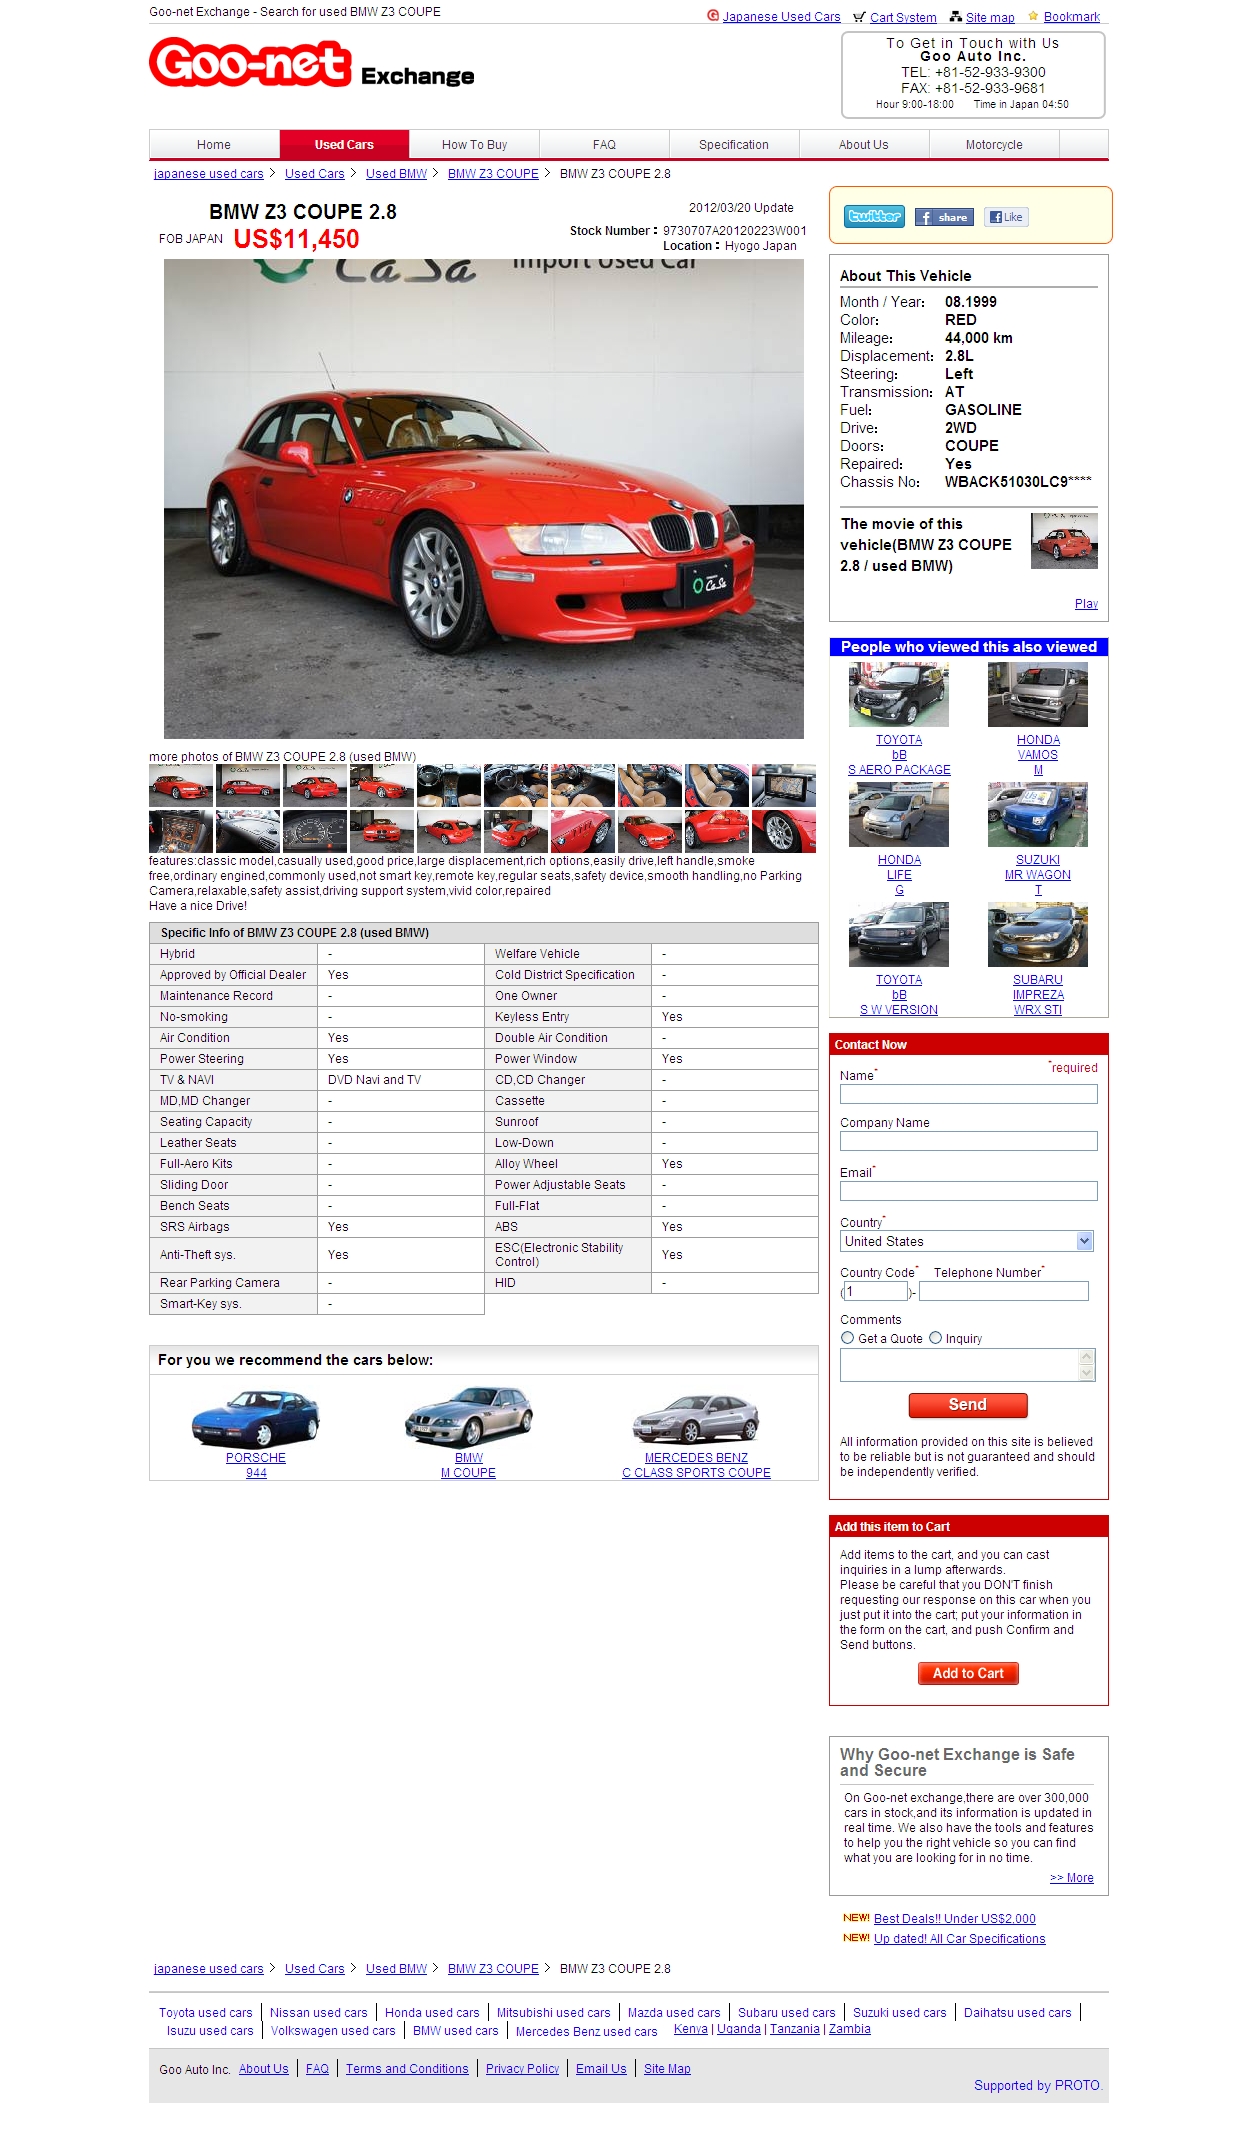 1999 BMW Z3 Coupe | Hellrot Red | Walnut | Ad Screenshot WBACK51030LC9****